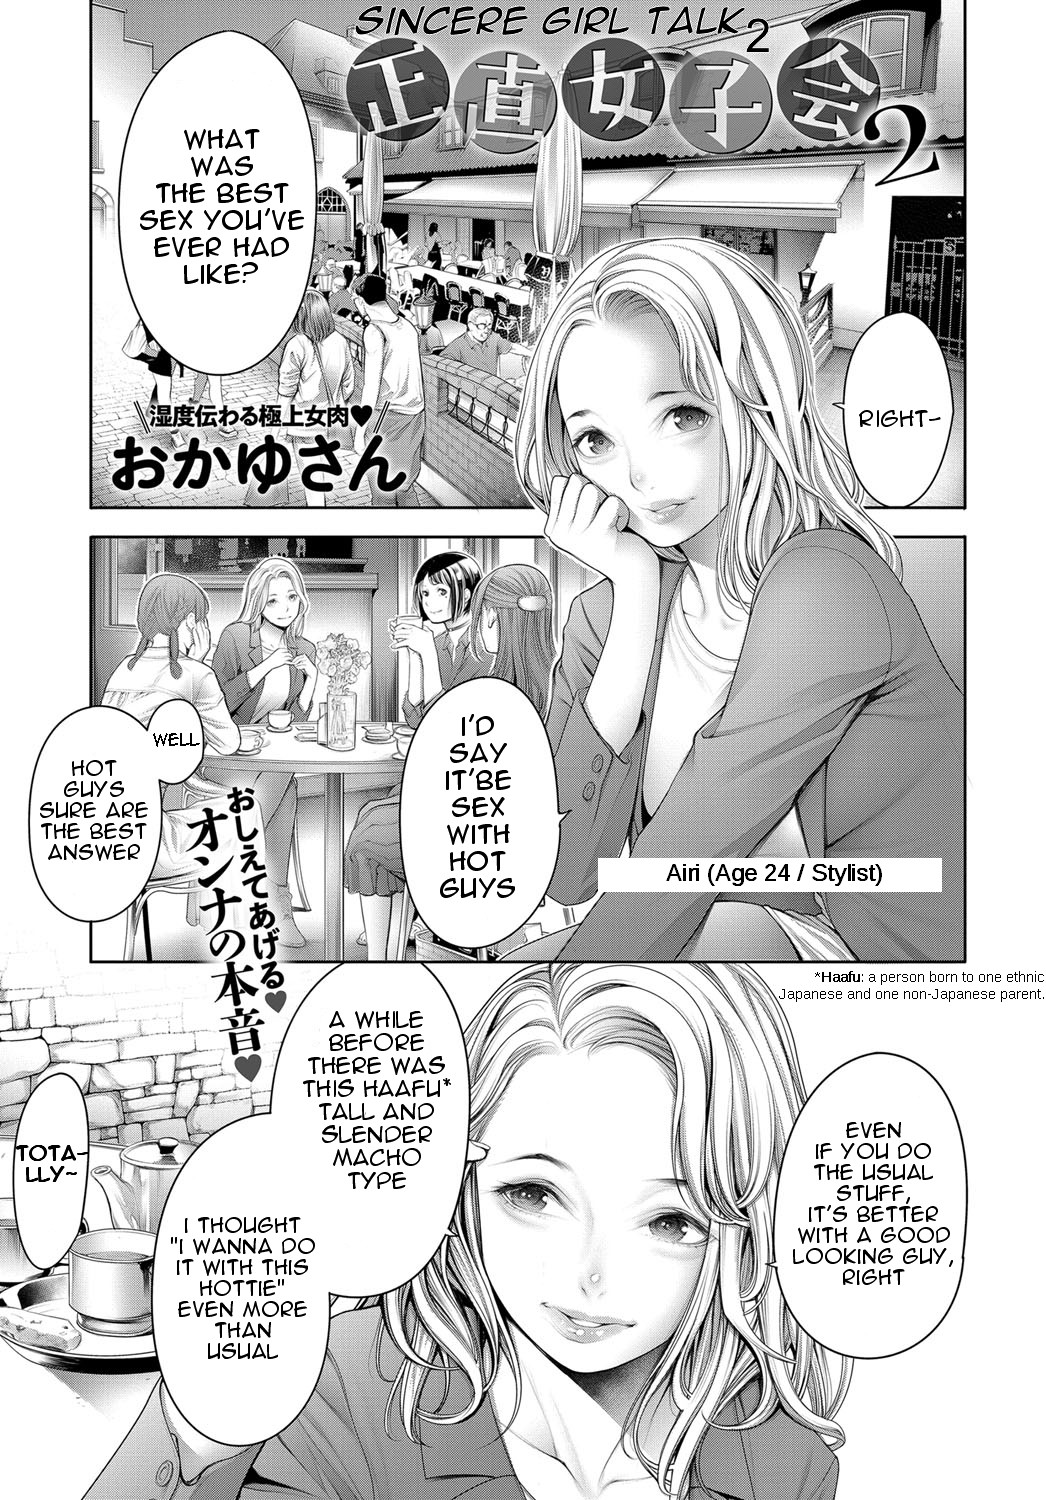 Hentai Manga Comic-Sincere Girl Talk 2-Read-1